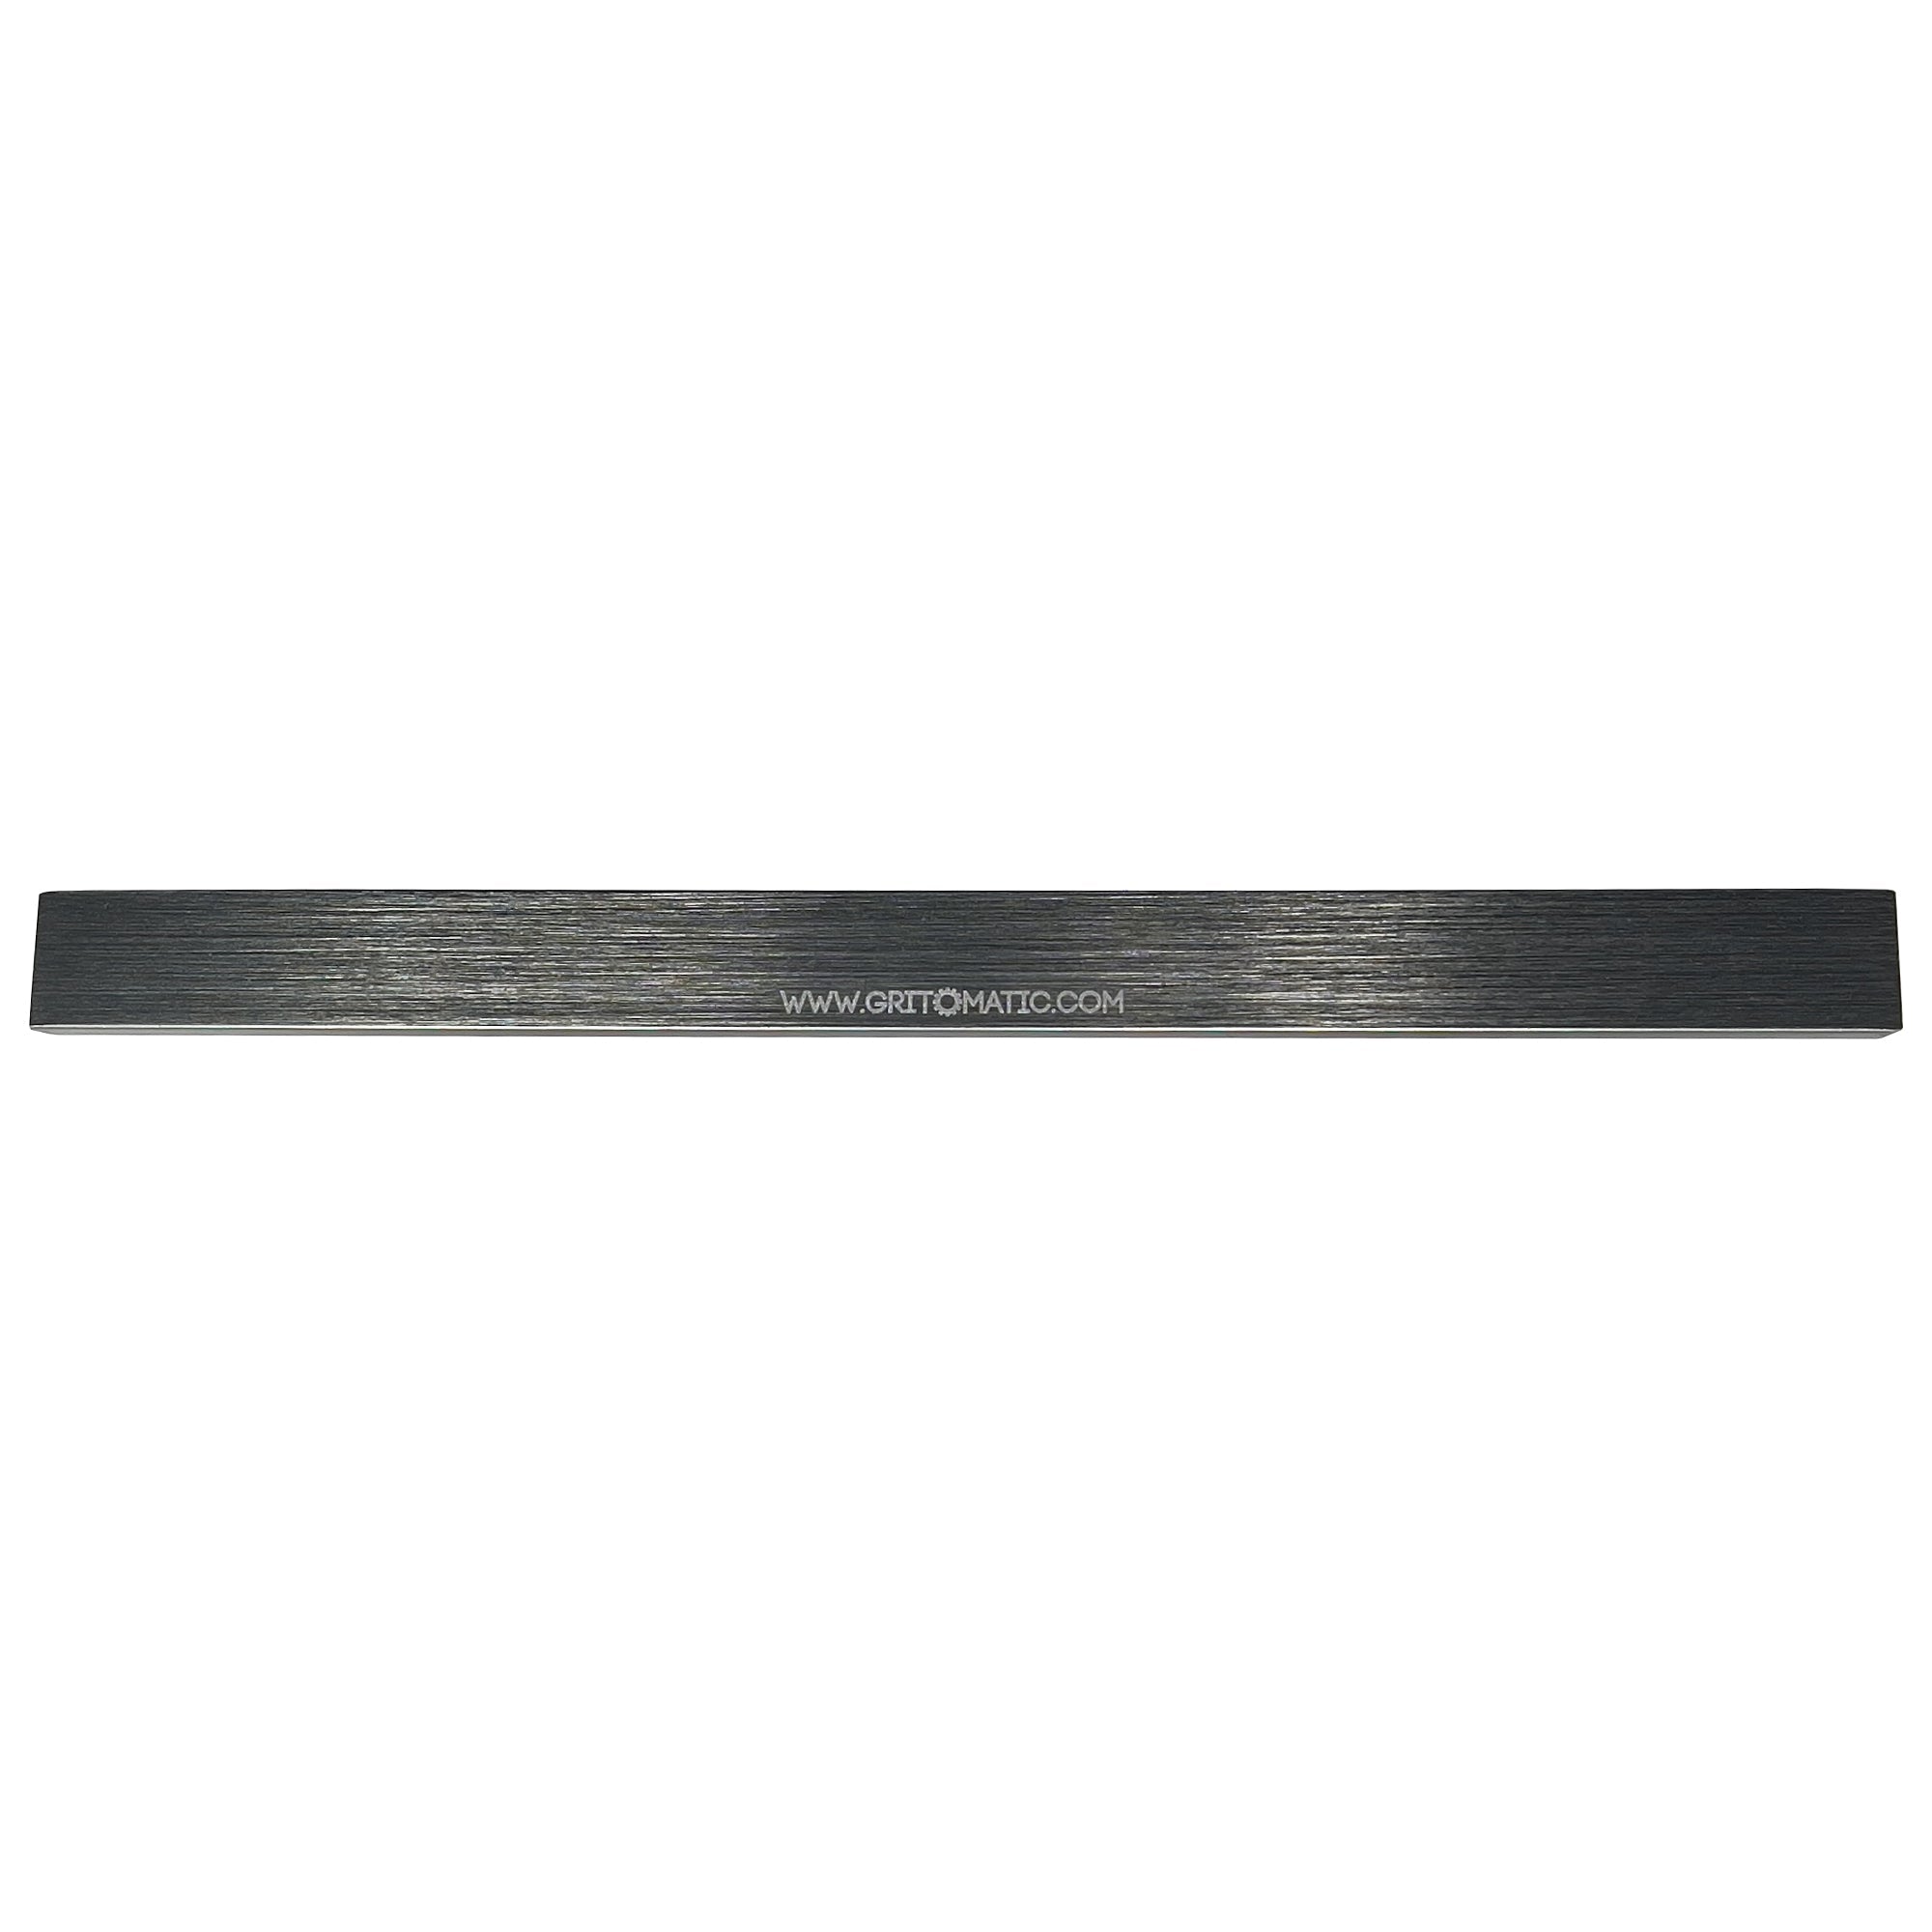 Anodized Aluminum Blank [160 x 25 x 5mm] [6 x 1] – Gritomatic